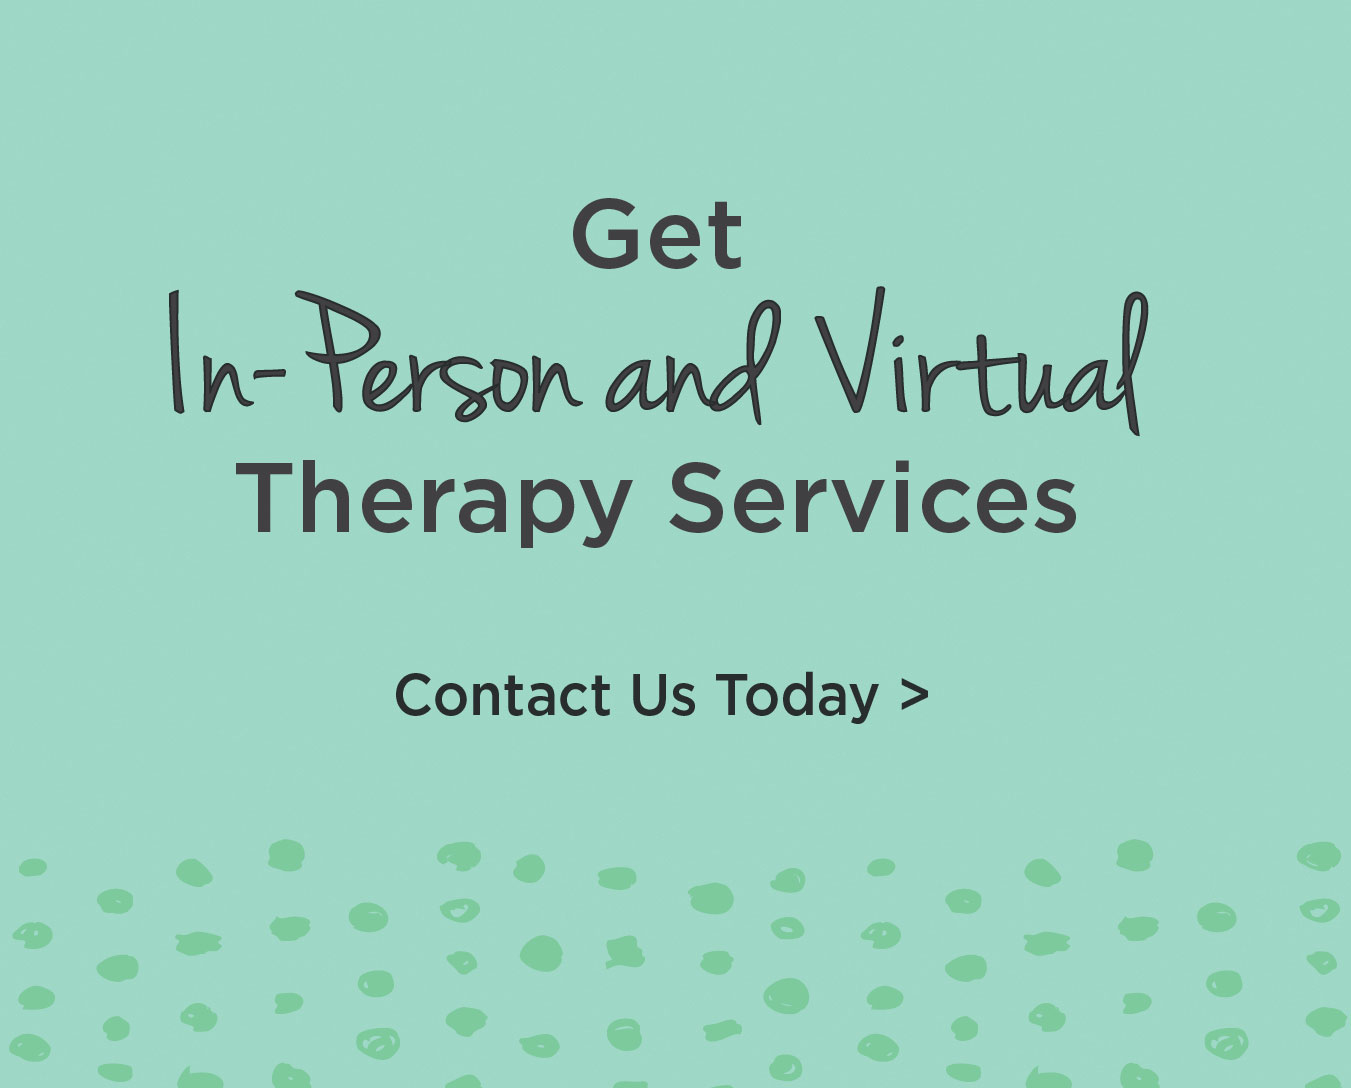 Make a referral for behavioral health services